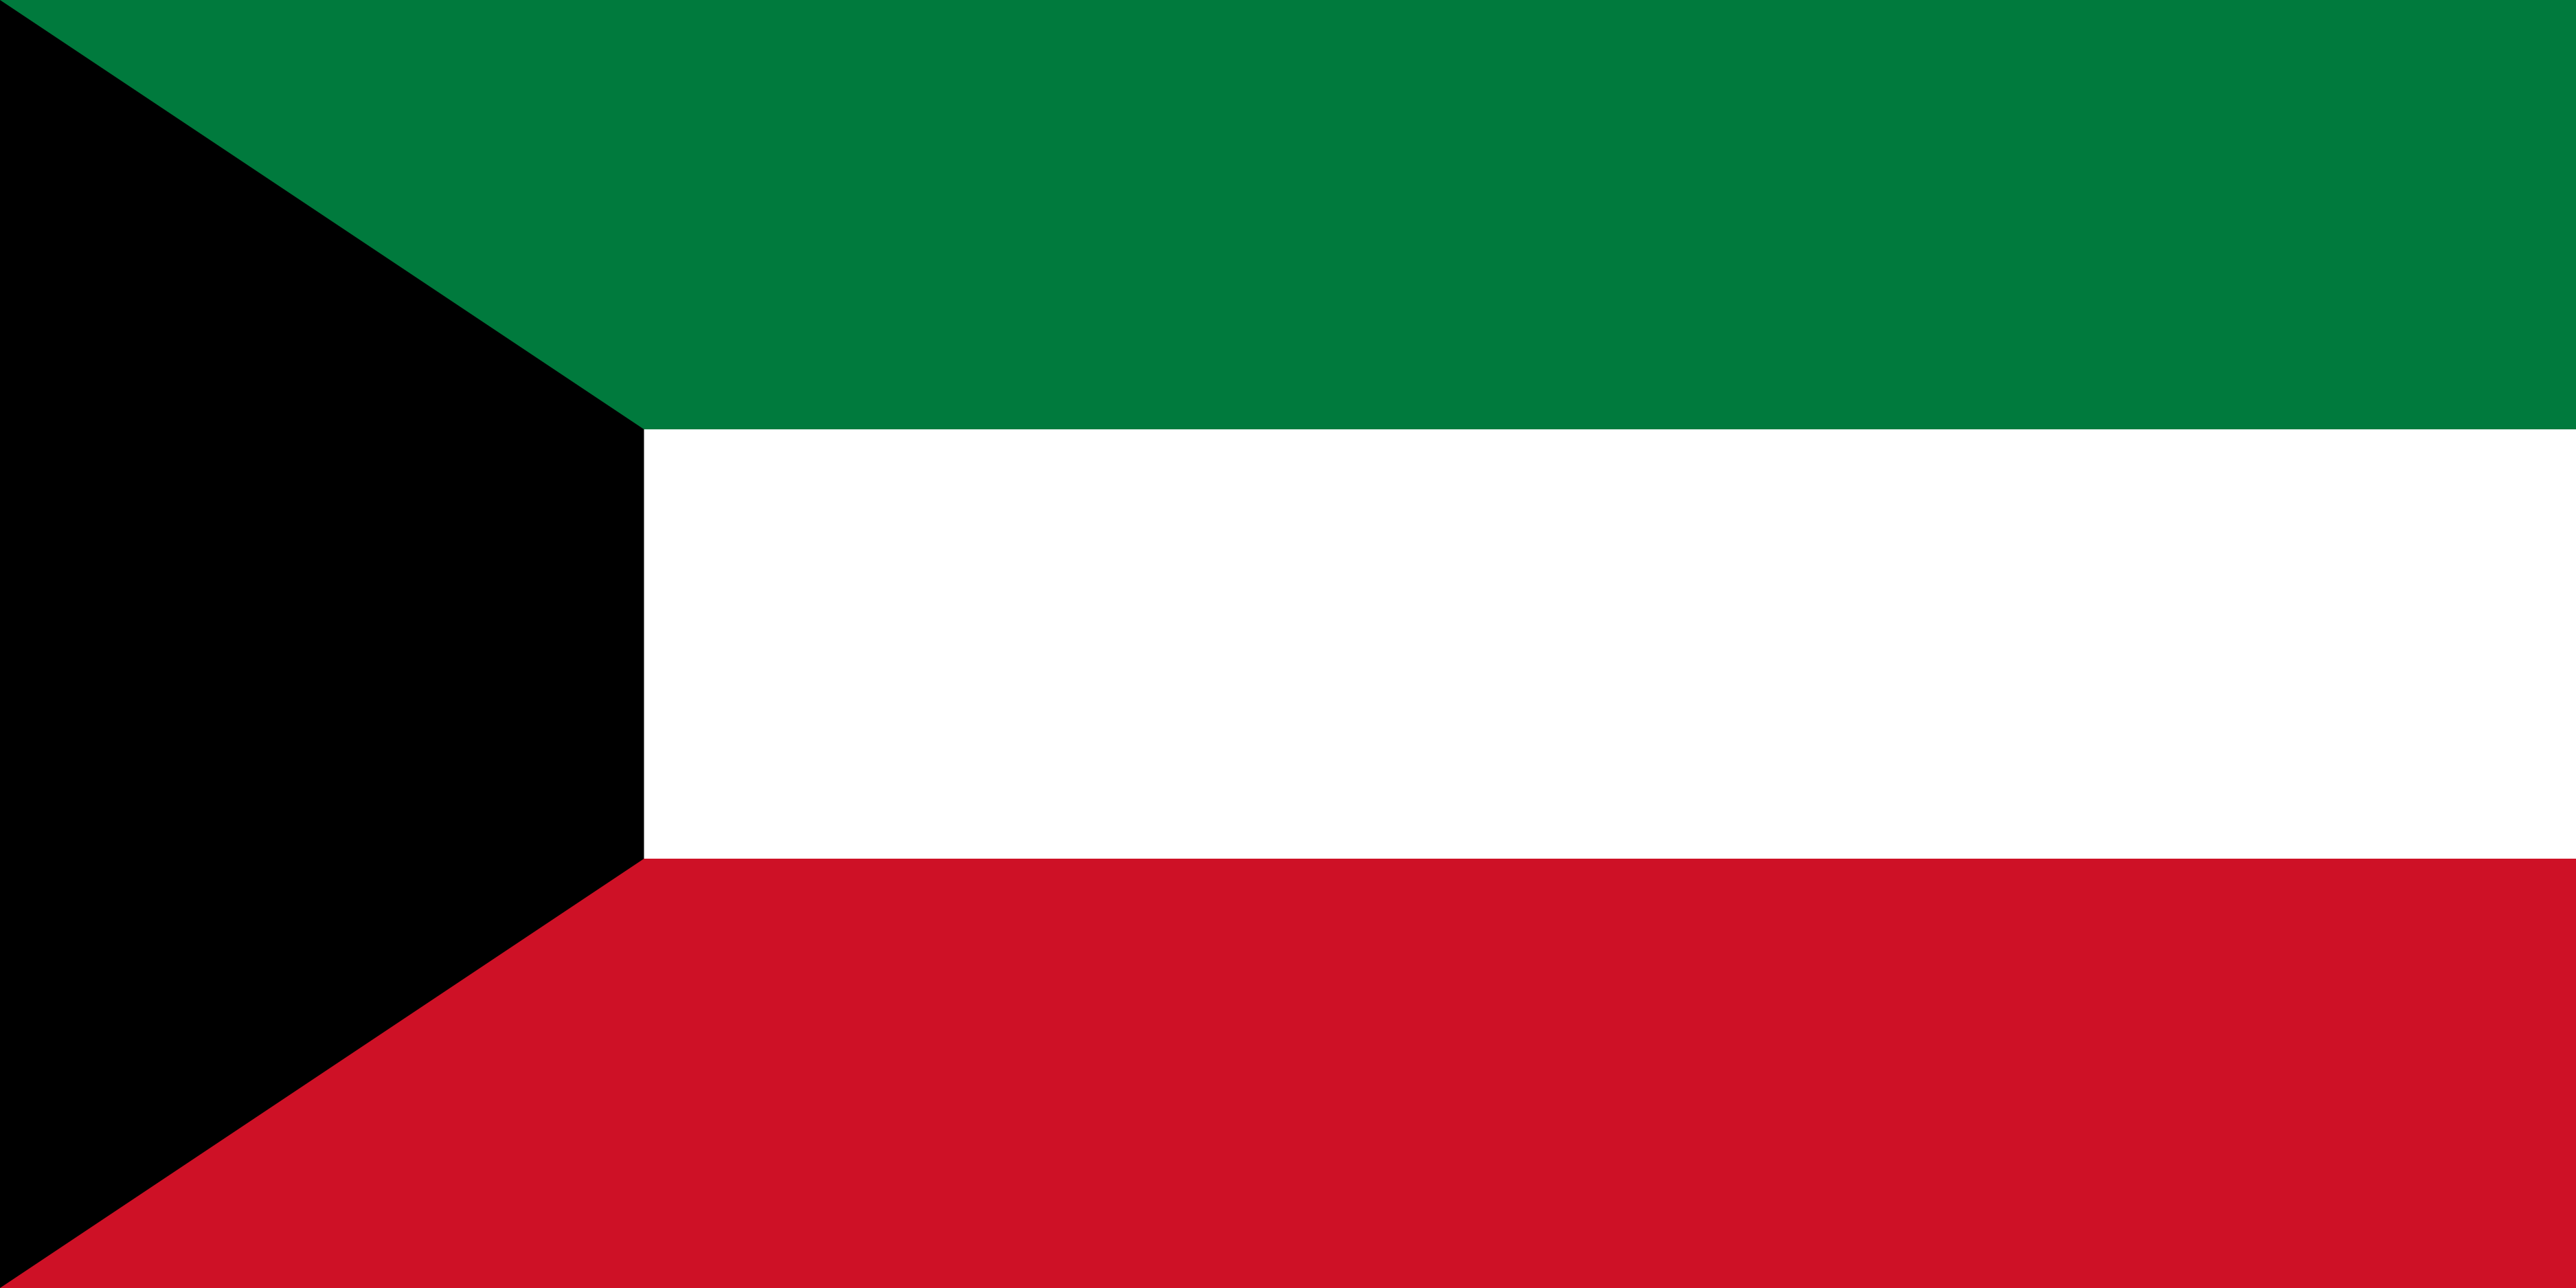 Kuwait Flag Vector - Free Download